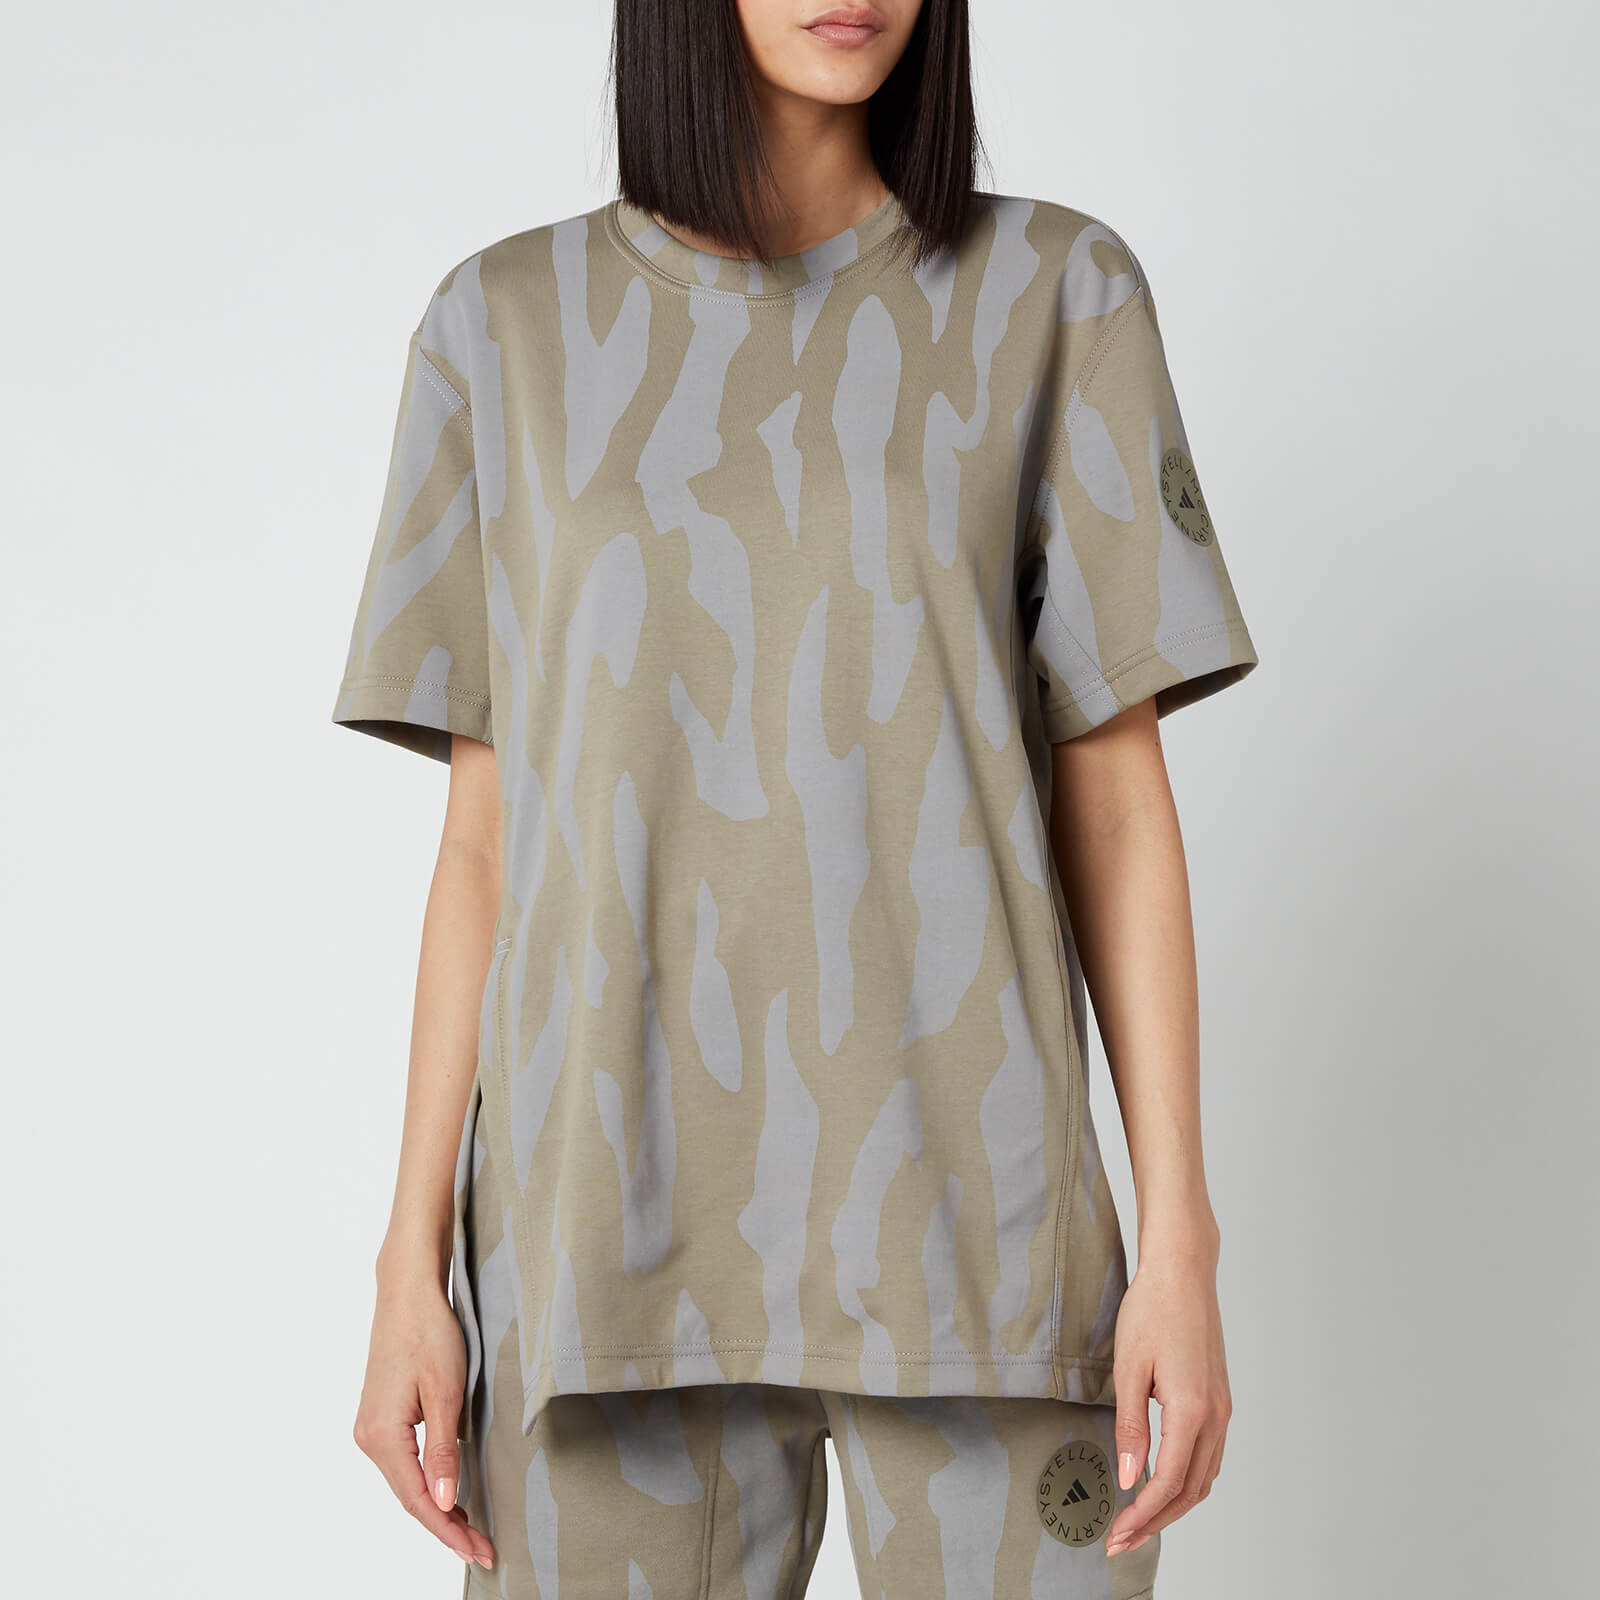 Adidas by Stella McCartney Women's Asmc Future Playground T-Shirt - Clay/Dove Grey - S